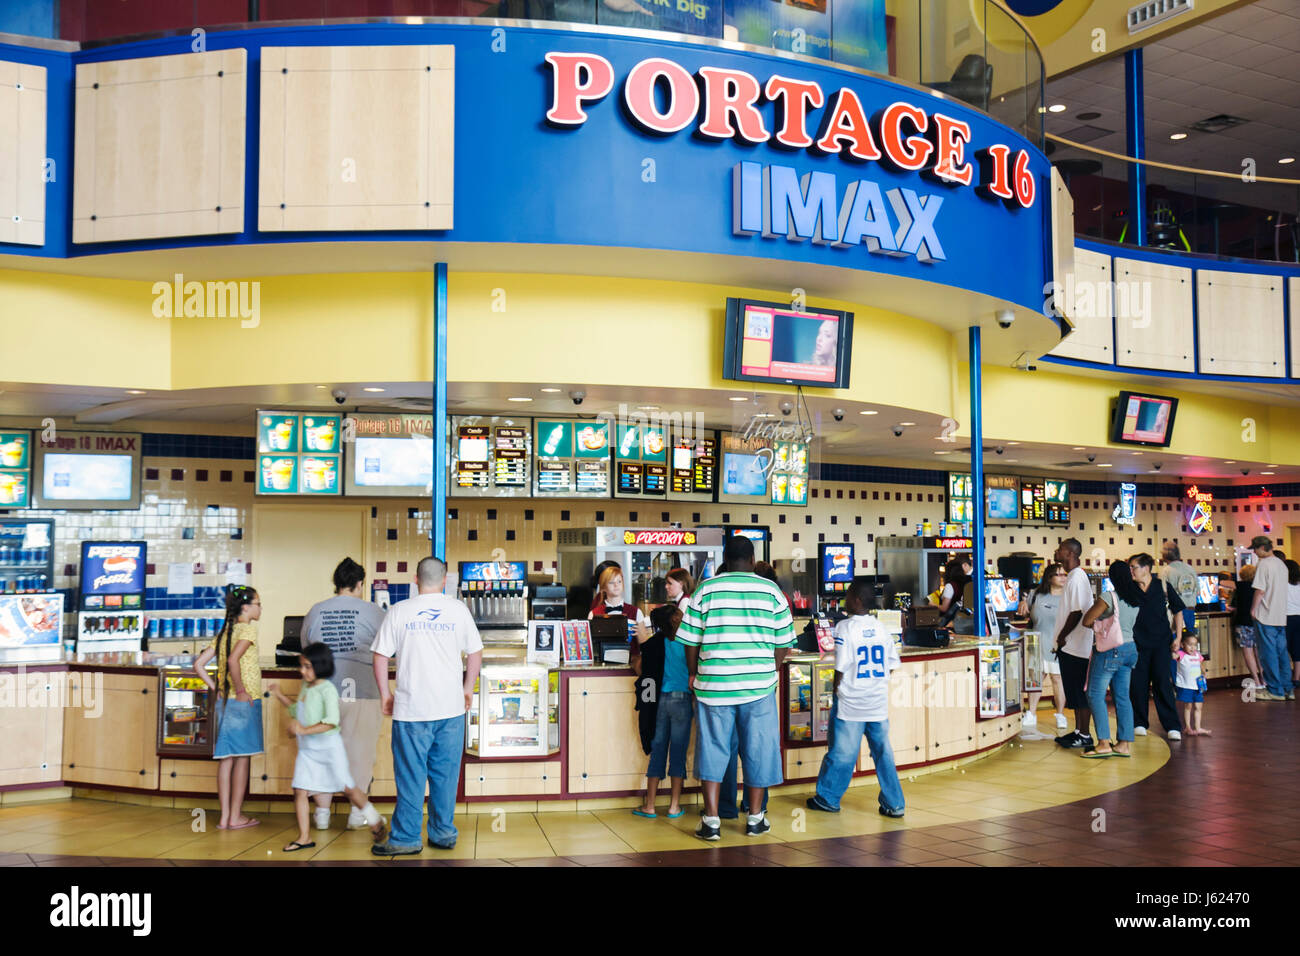 Portage Indiana, 16 IMAX, Kino-Komplex, Essen, Theke, Snacks, Snacks, Popcorn, Getränke, Getränke, Getränke, Familien, Unterhaltung, multikulturell Stockfoto